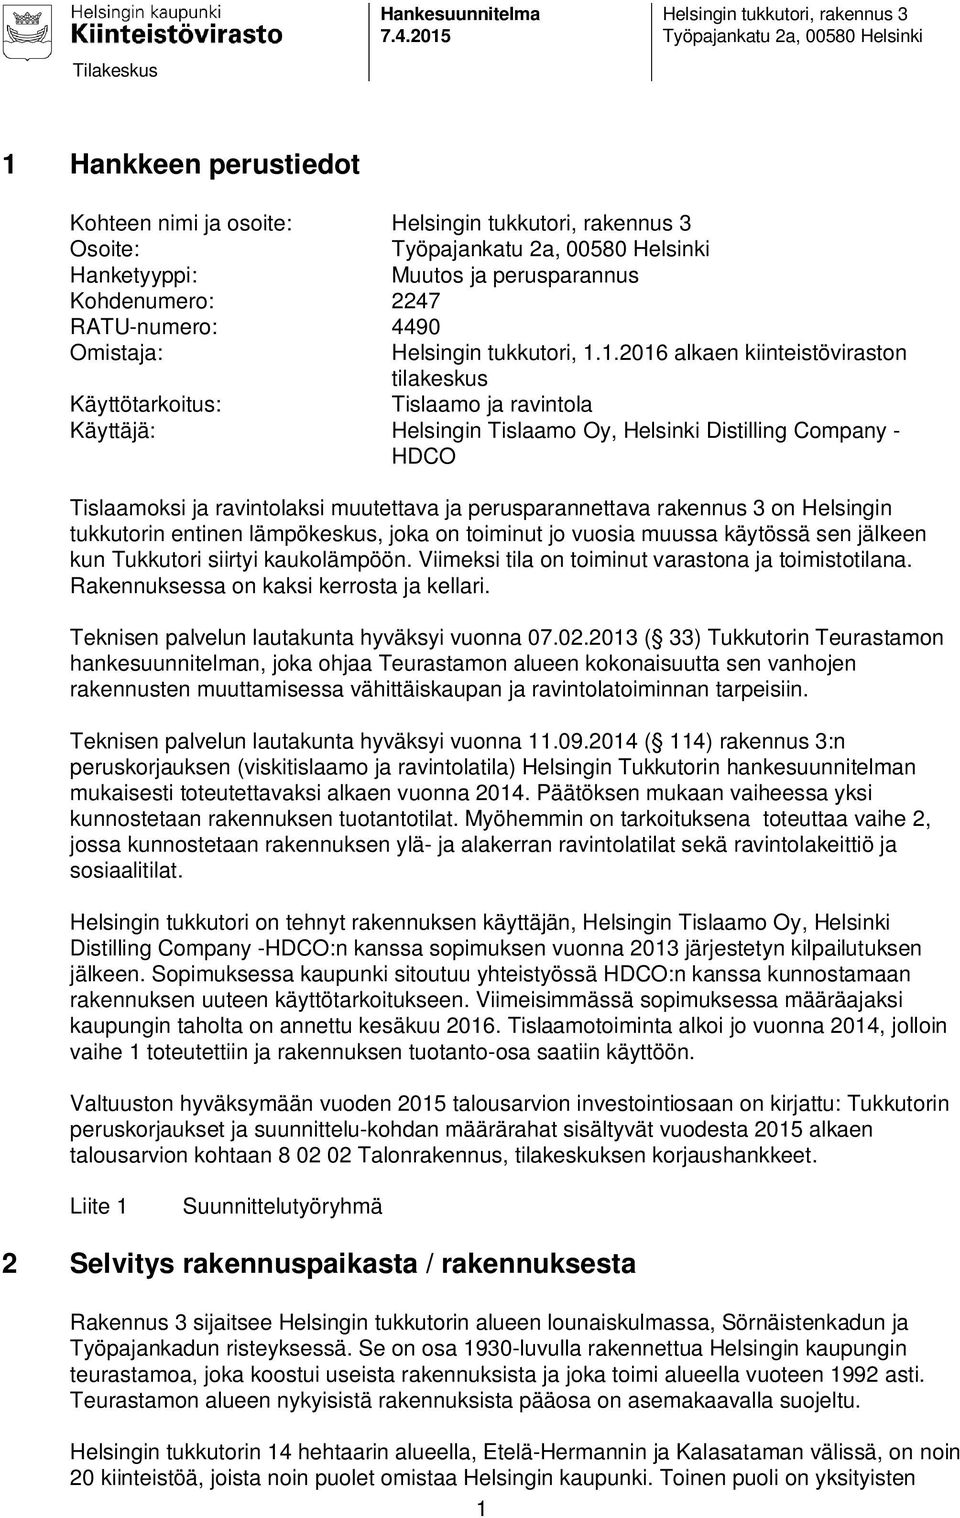 Hanketyyppi: Muutos ja perusparannus Kohdenumero: 2247 RATU-numero: 4490 Omistaja: Helsingin tukkutori, 1.